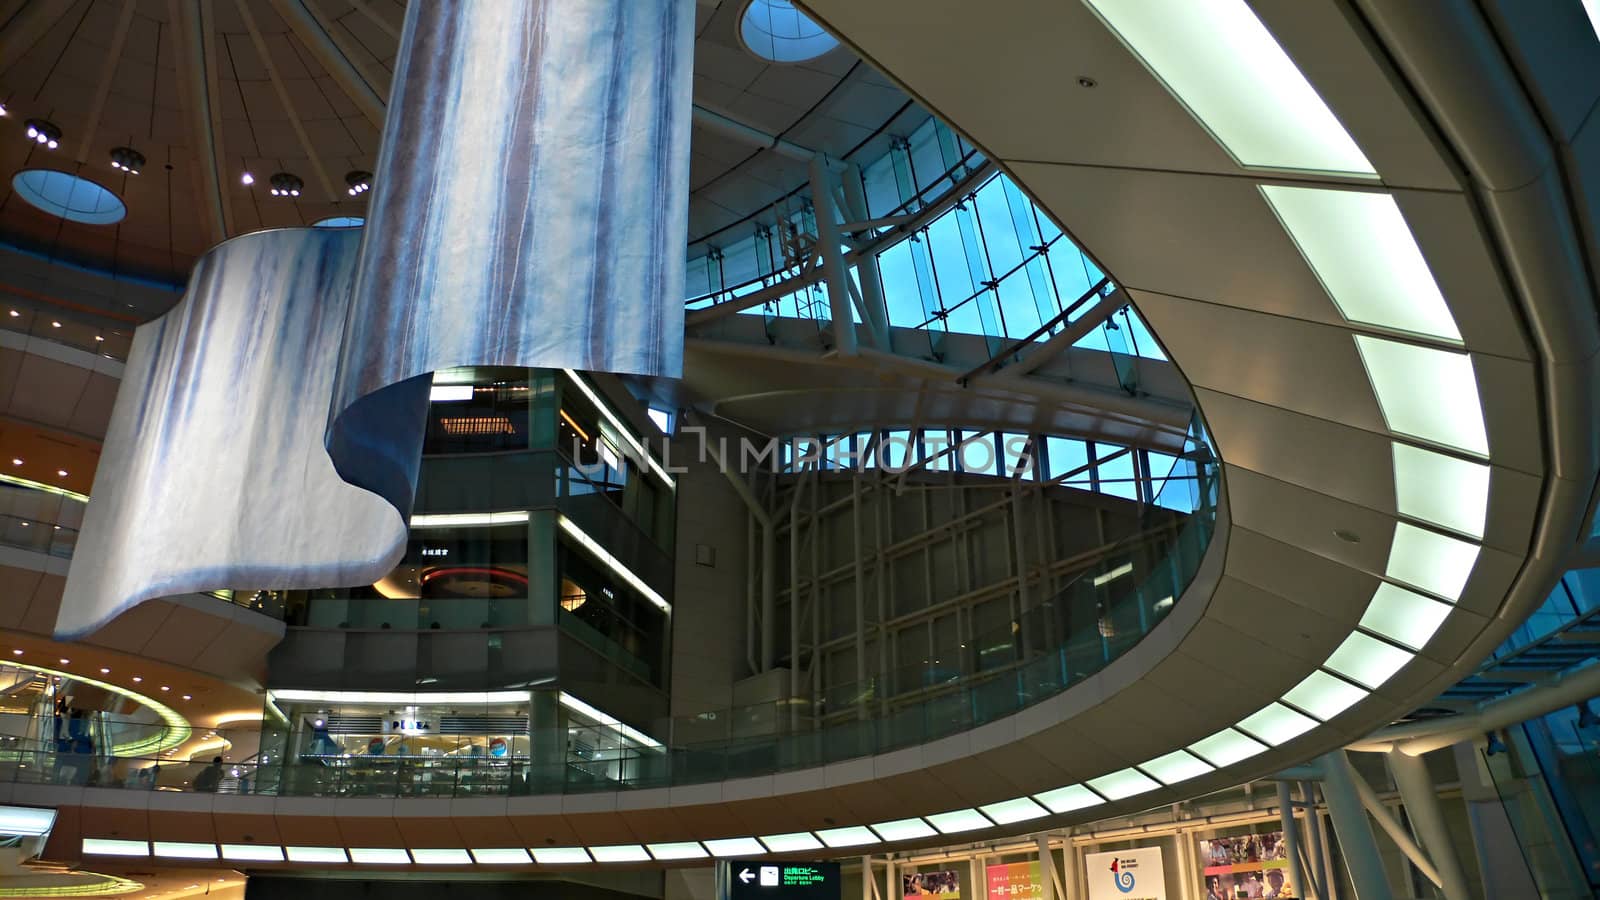 futuristic atrium environment, glass wall and metallic construction inside big public hall with sitting man